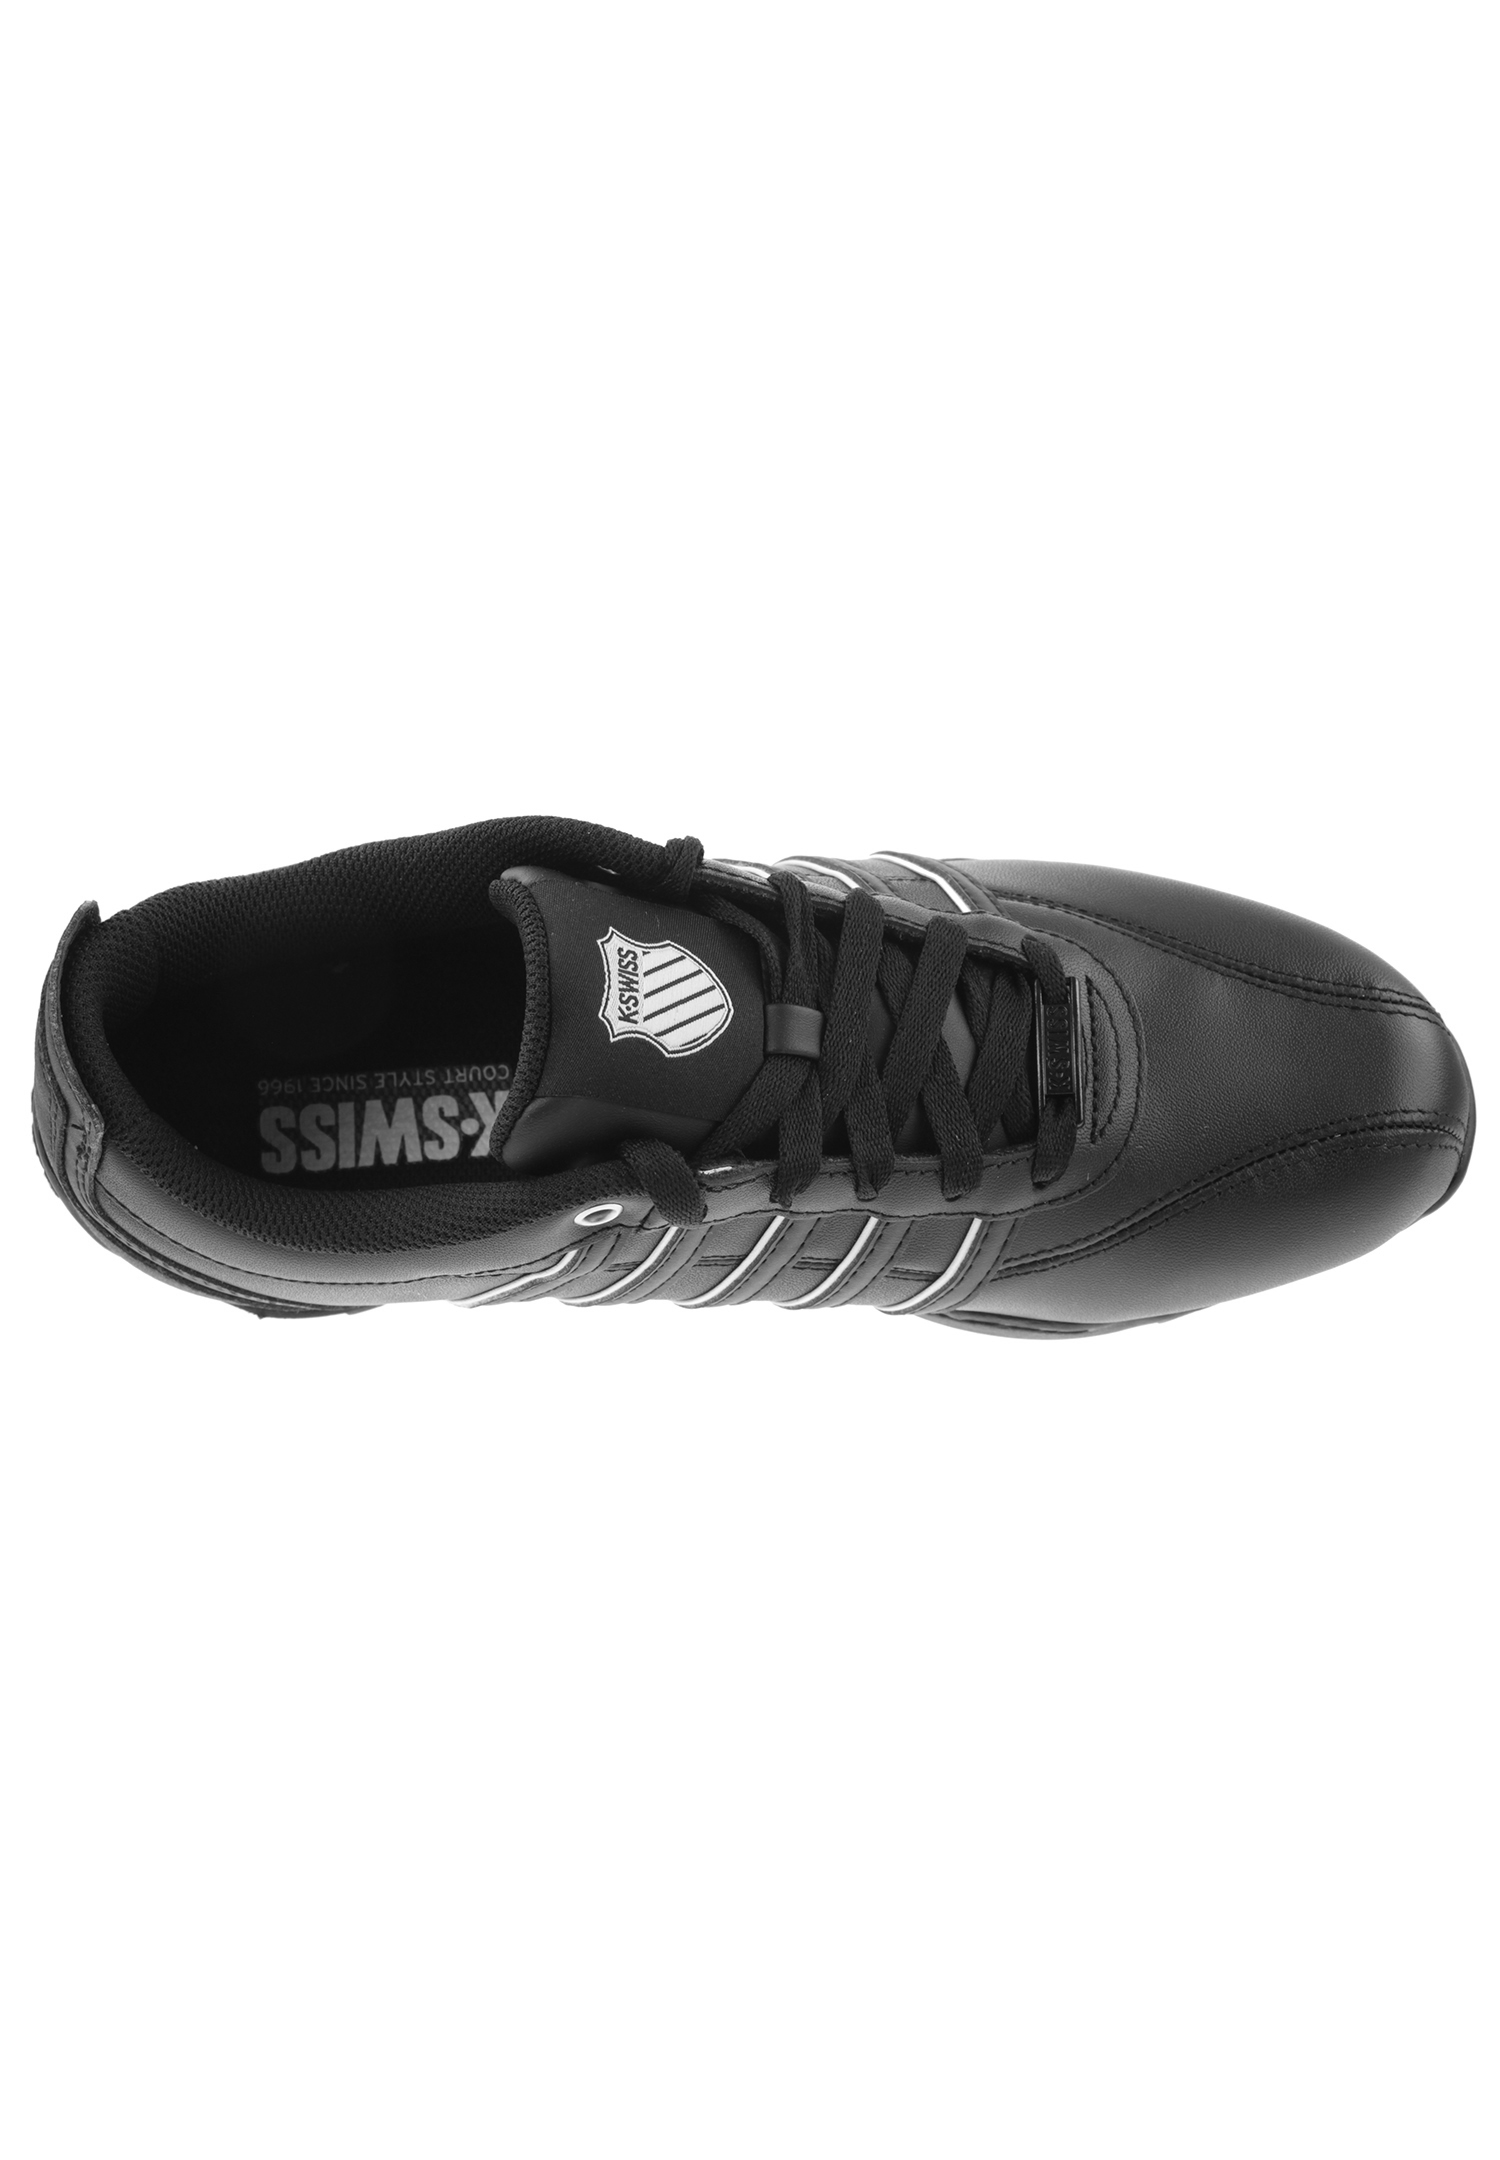 K-SWISS Arvee 1.5 Herren Sneaker Sportschuhe 02453-091-M schwarz weiss